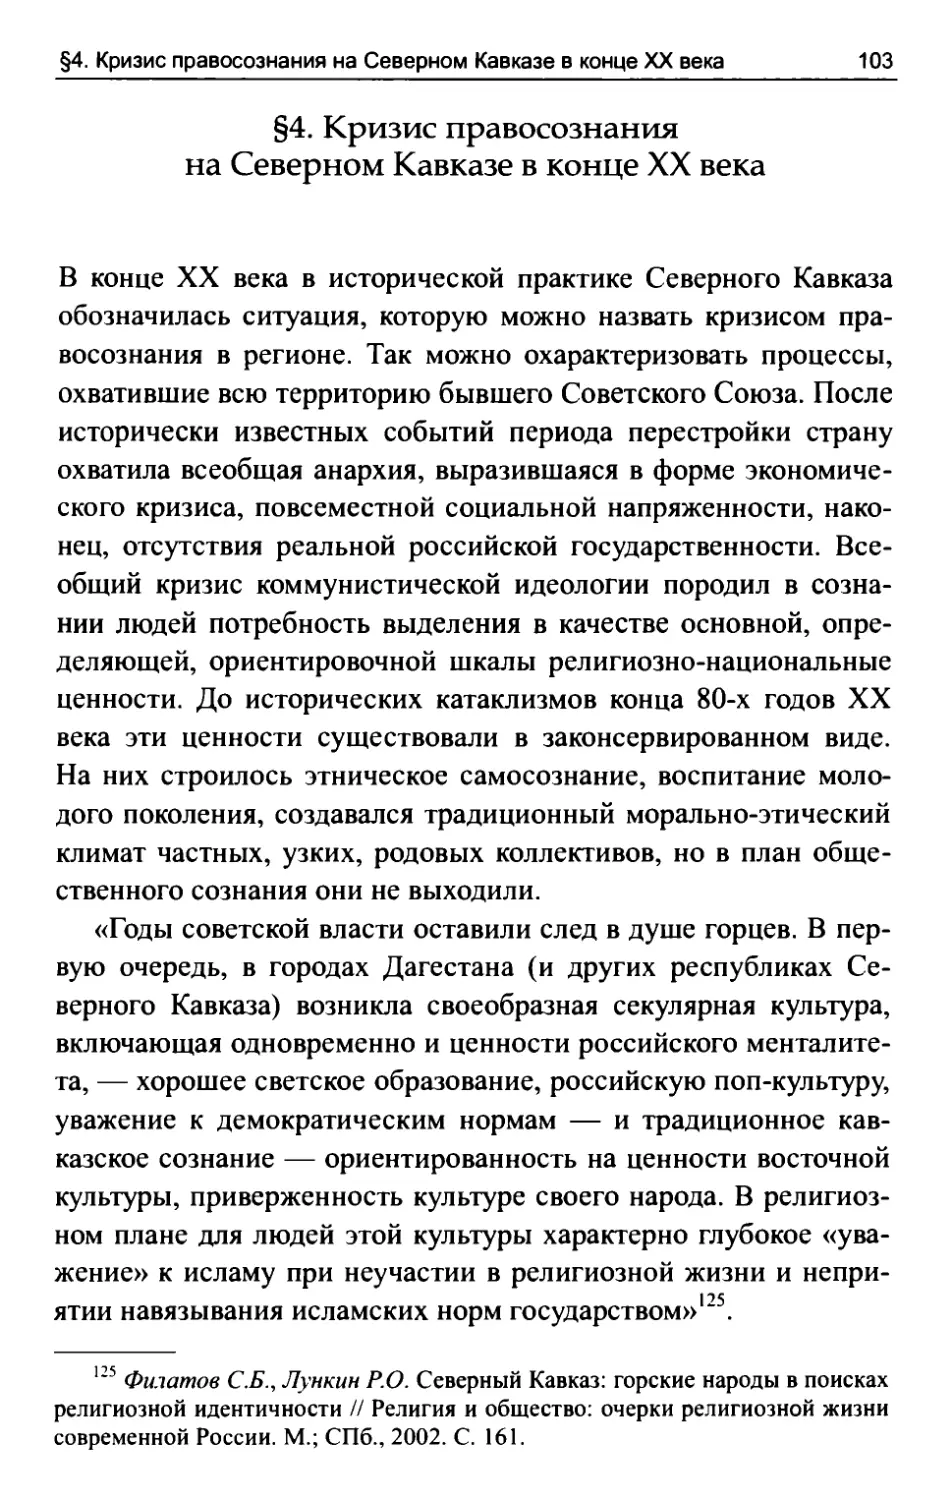 §4. Кризис правосознания на Северном Кавказе в конце XX века